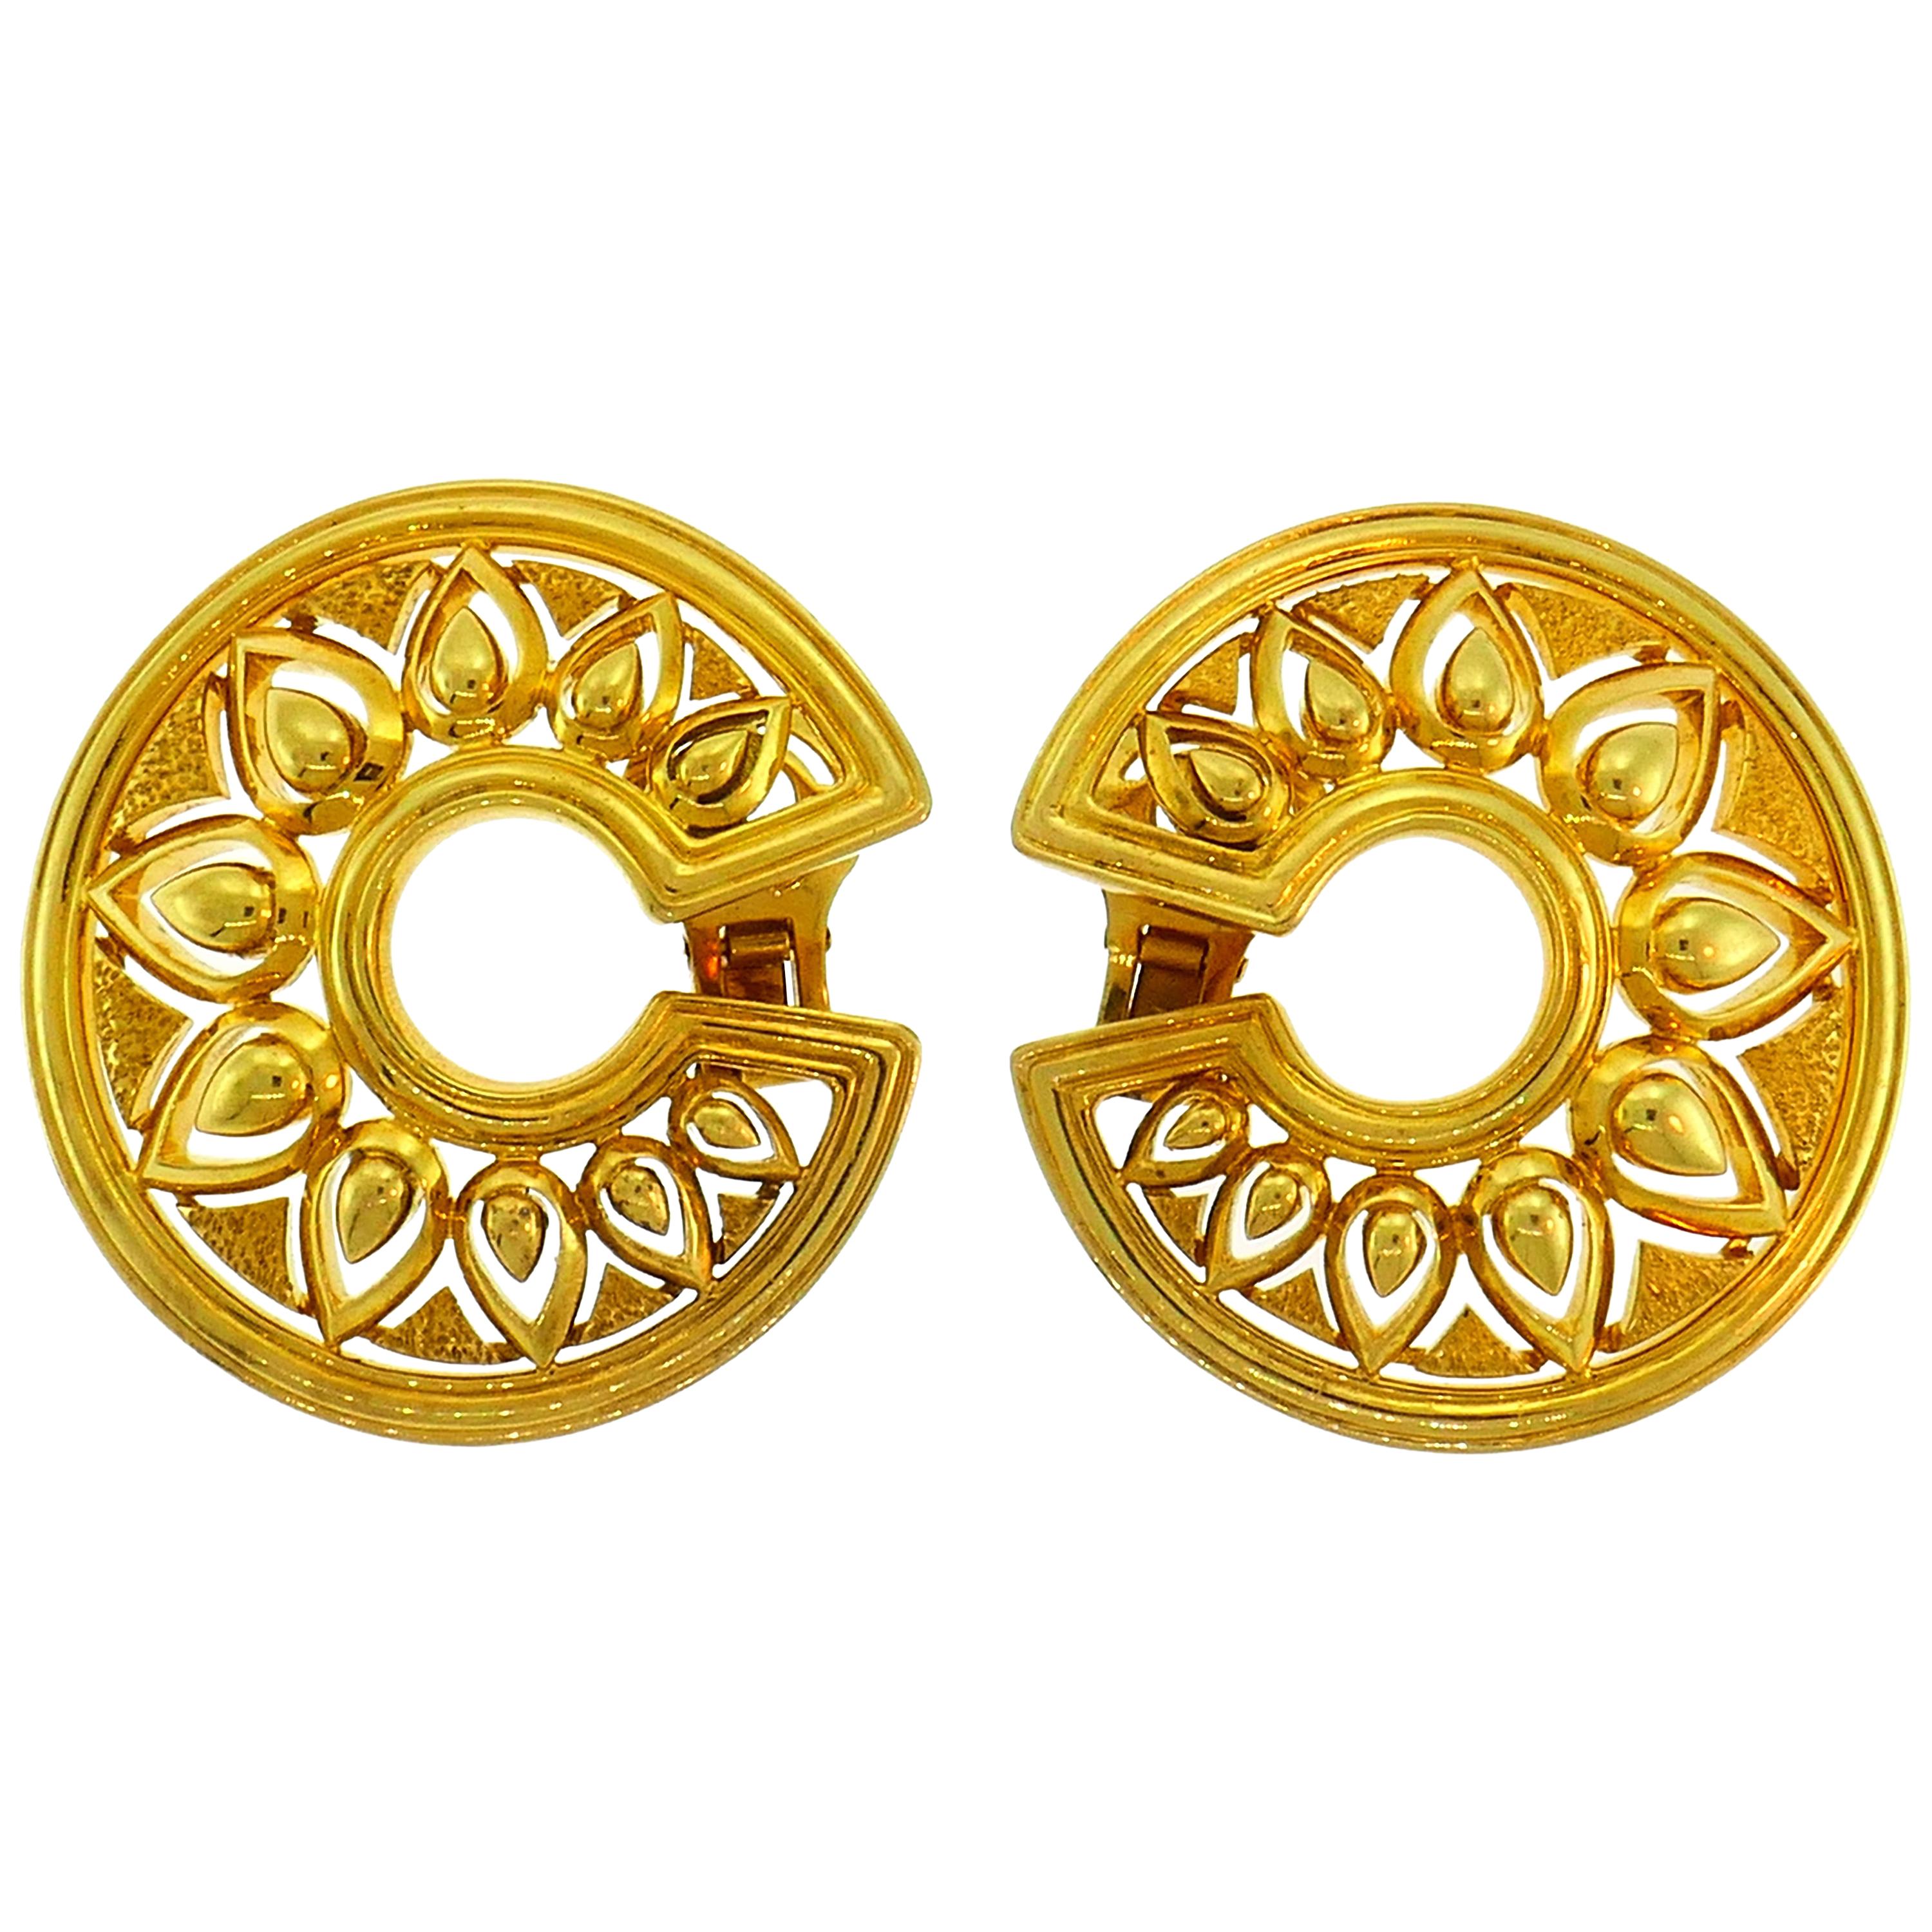 Vintage Cartier 18k Yellow Gold Earrings Estate Jewelry